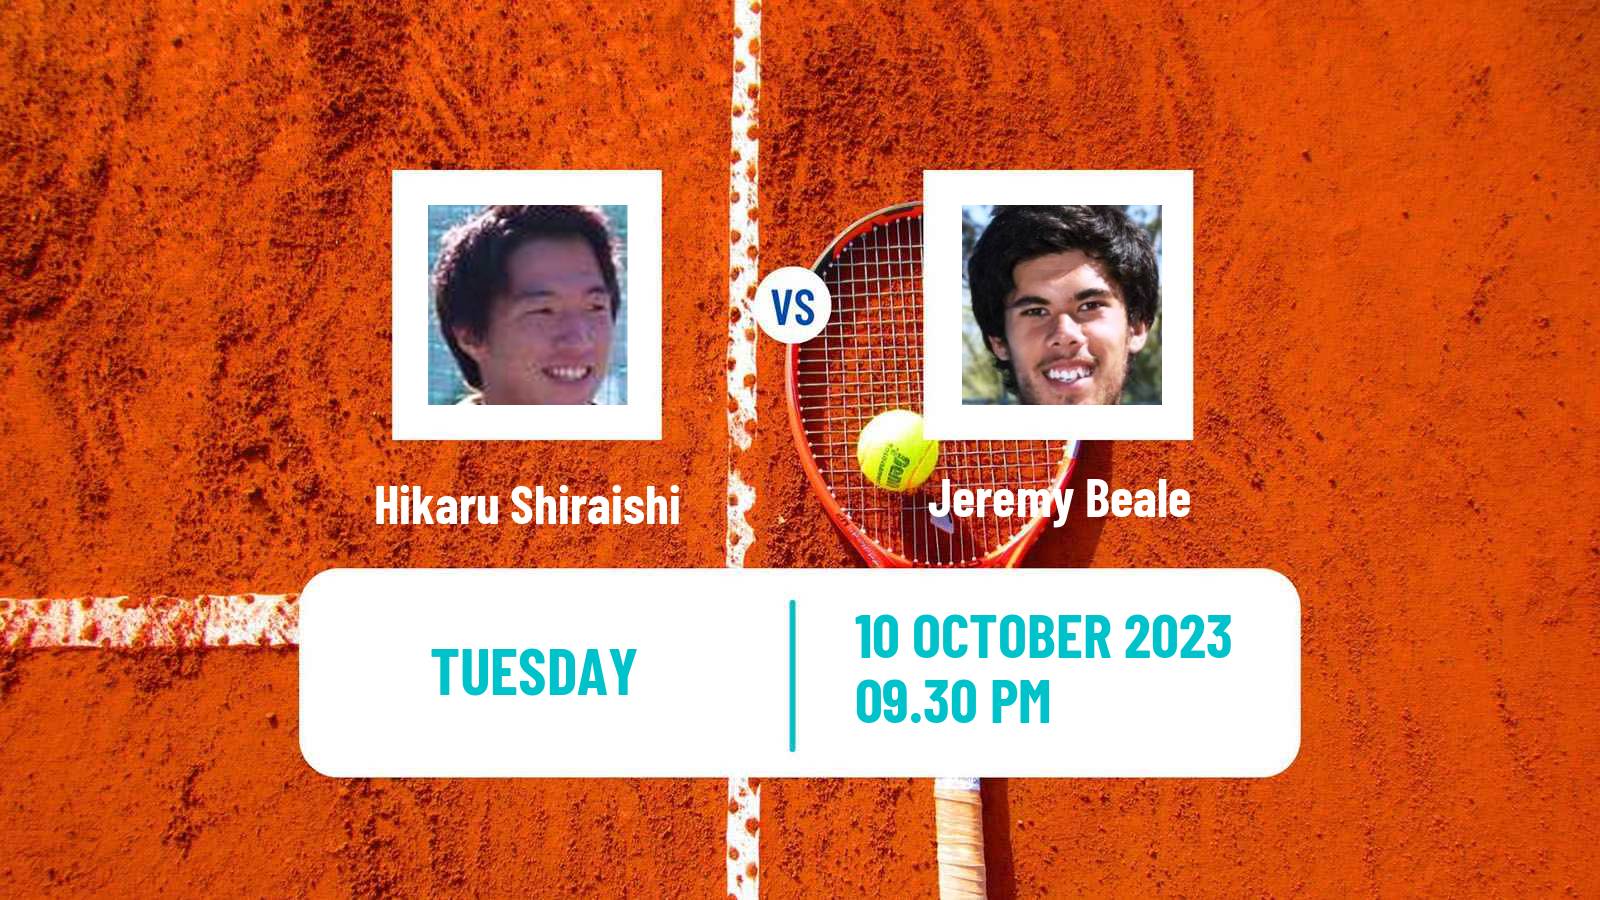 Tennis ITF M25 Cairns 2 Men Hikaru Shiraishi - Jeremy Beale